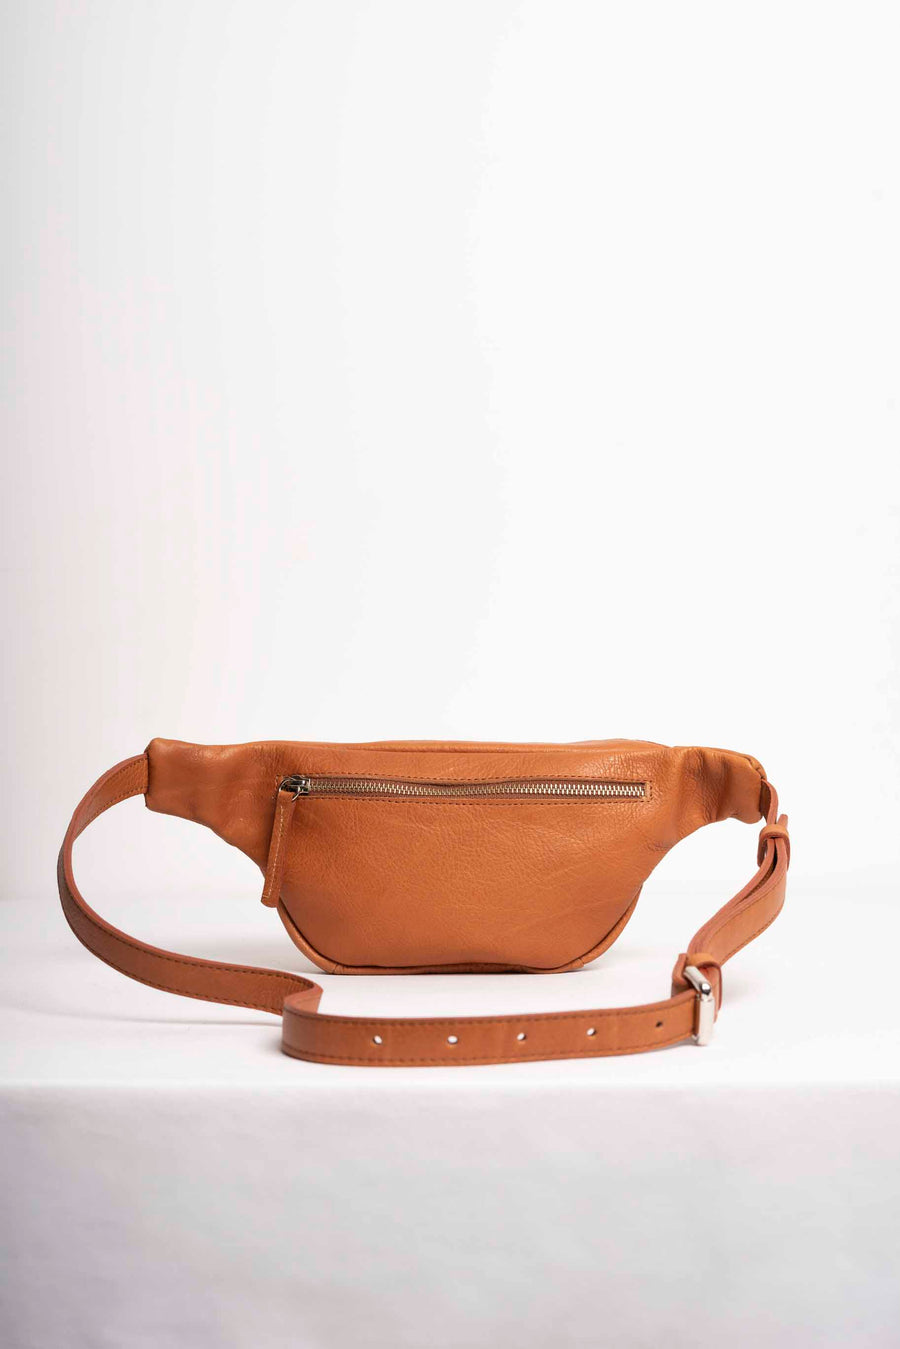 Leather fanny pack. Full grain leather belt bag. Caramel vegetable tanned leather.